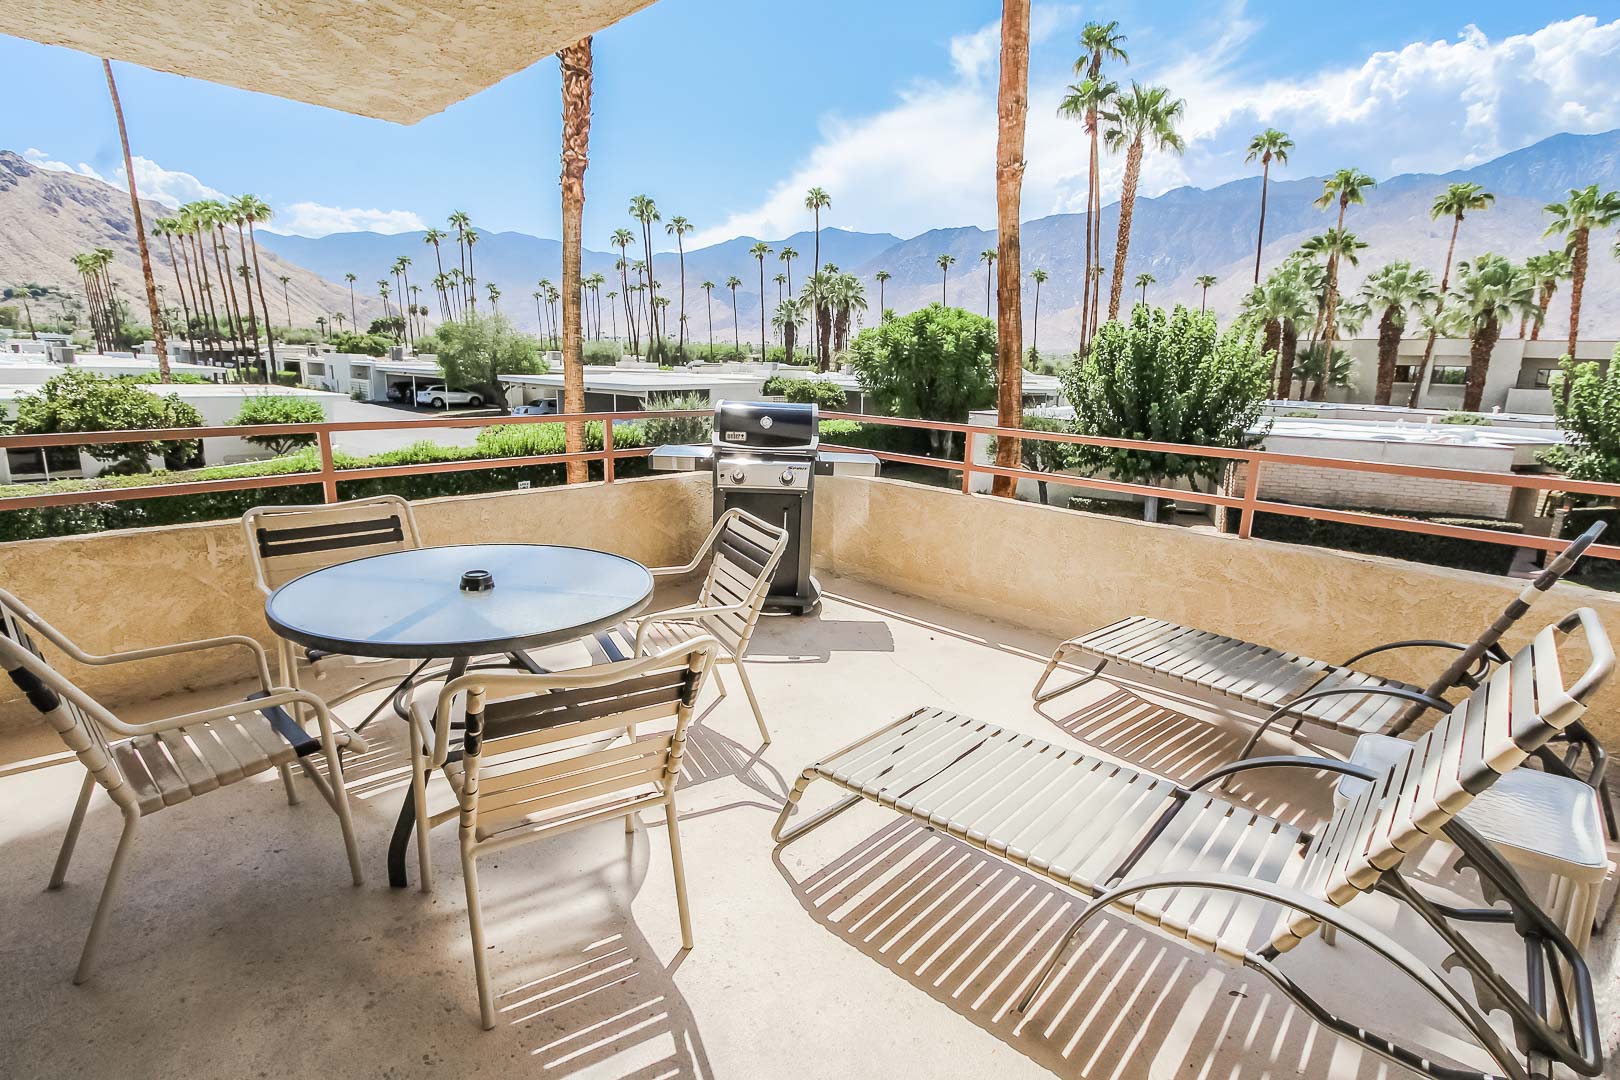 A relaxing balcony view at VRI's Desert Isle Resort in California.